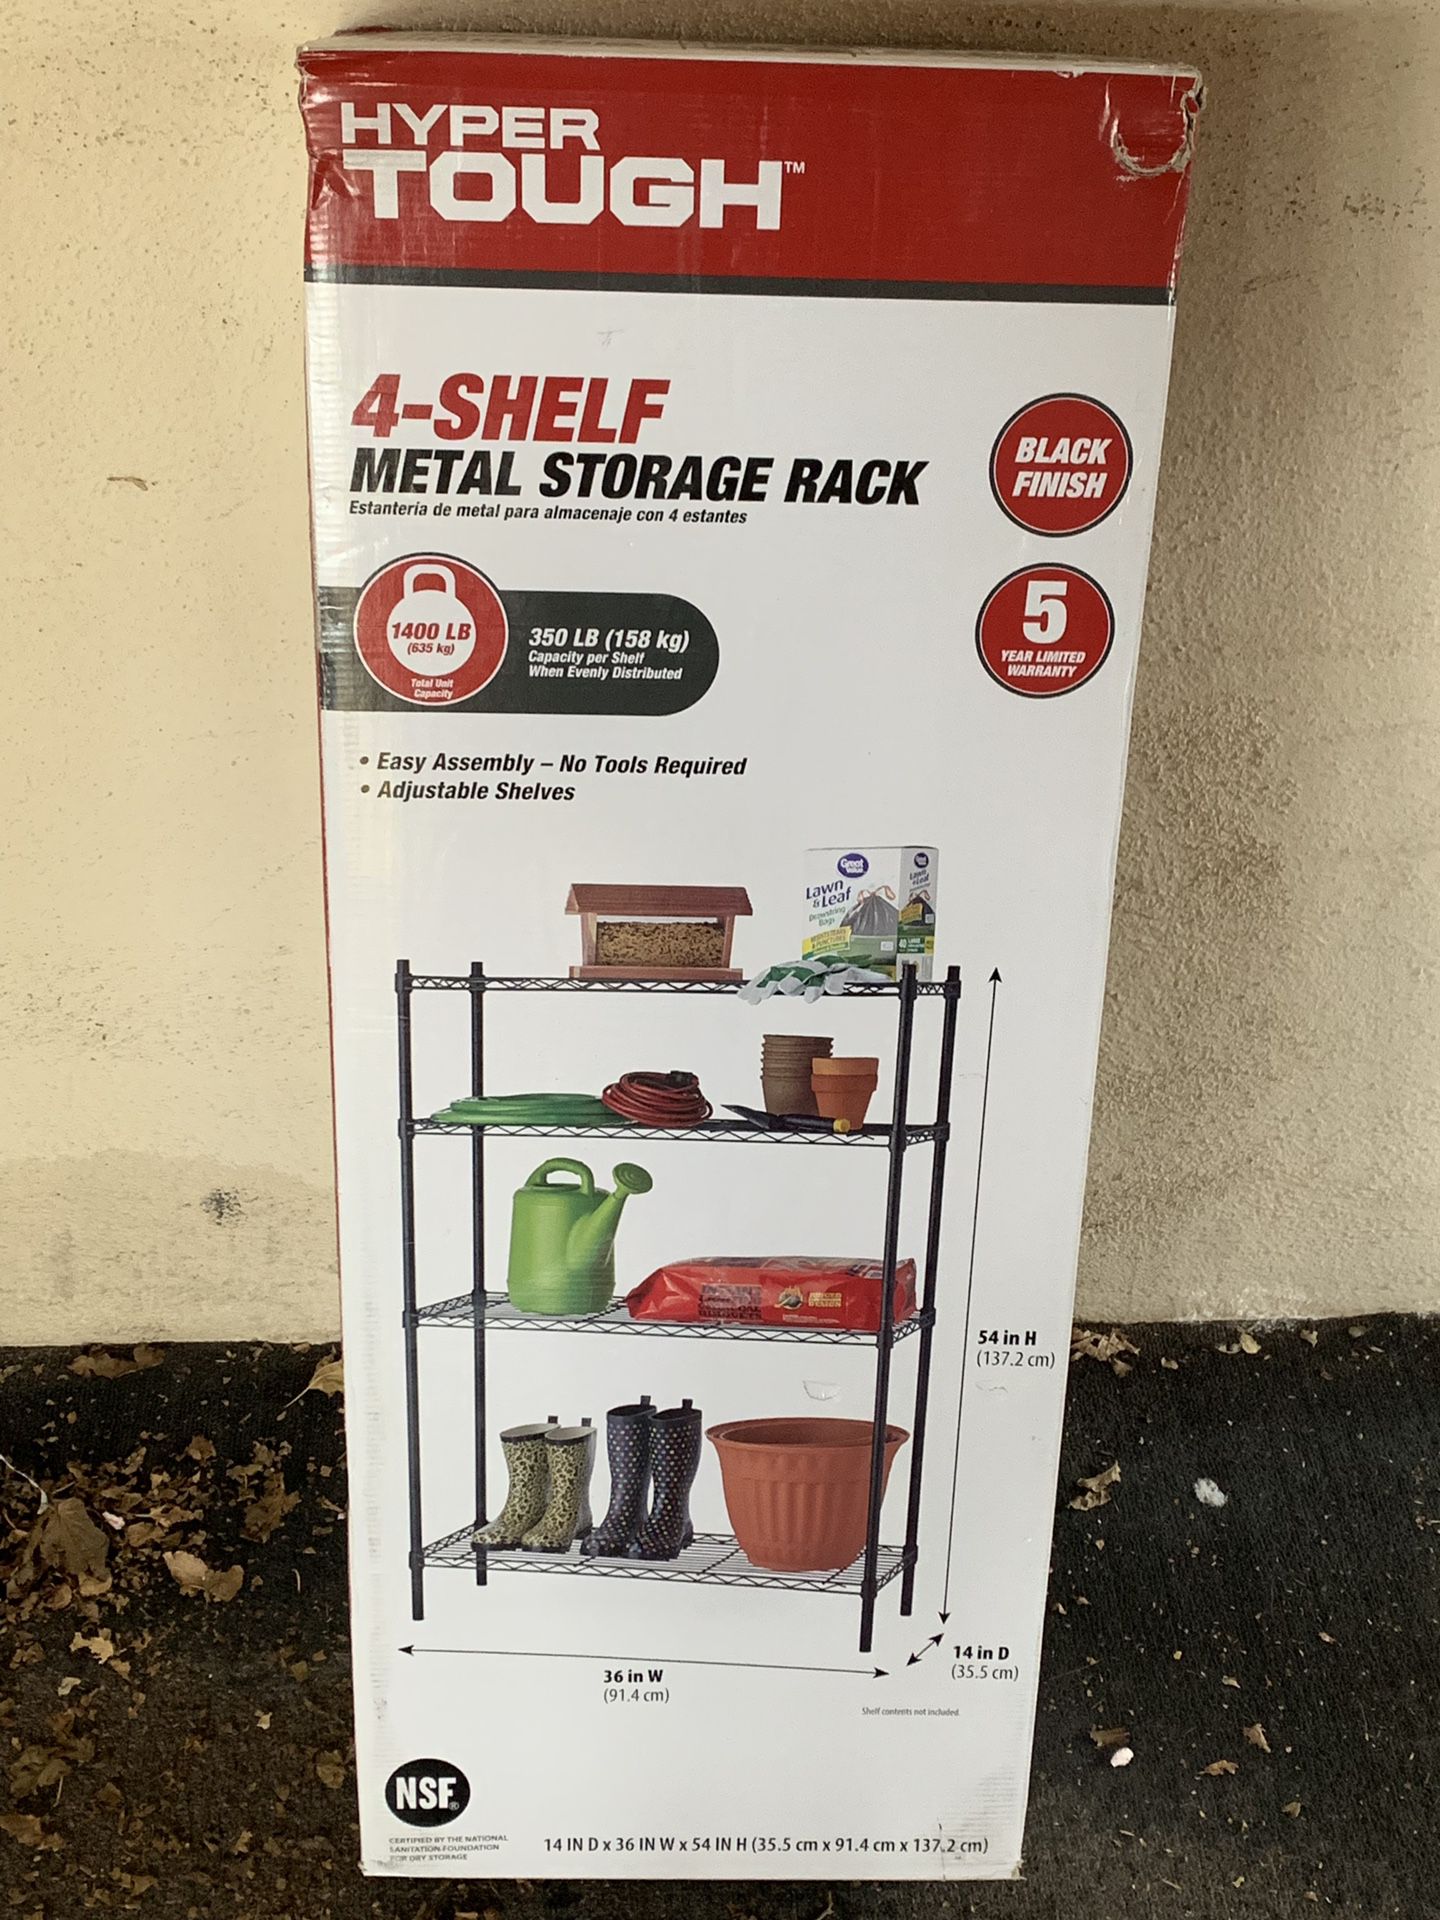 Hyper Tough NEW metal storage rack!